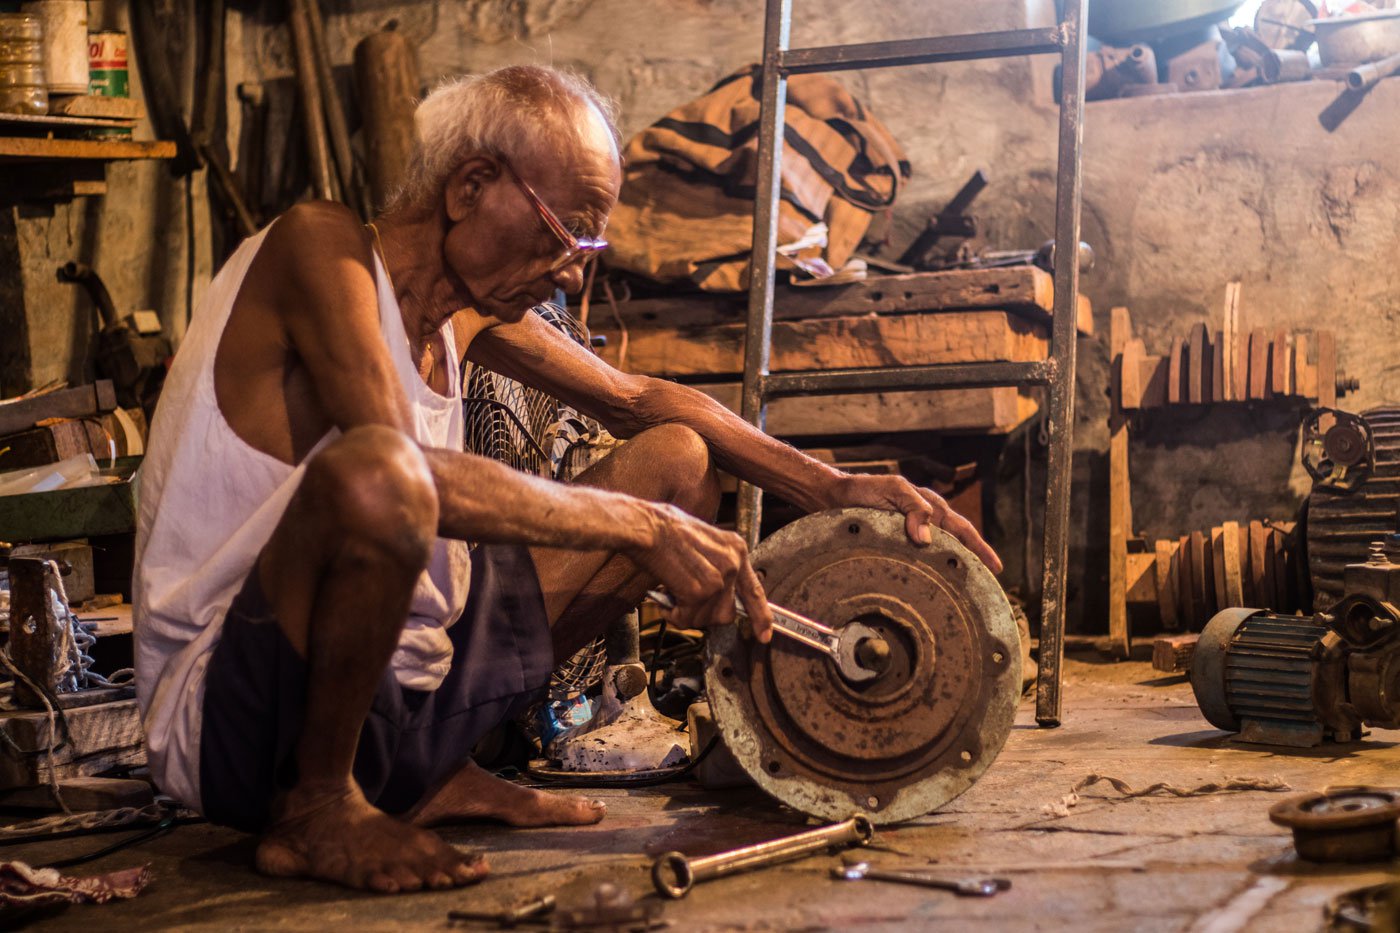 Once a handloom maker of repute, Bapu now makes a living repairing and rewinding motors